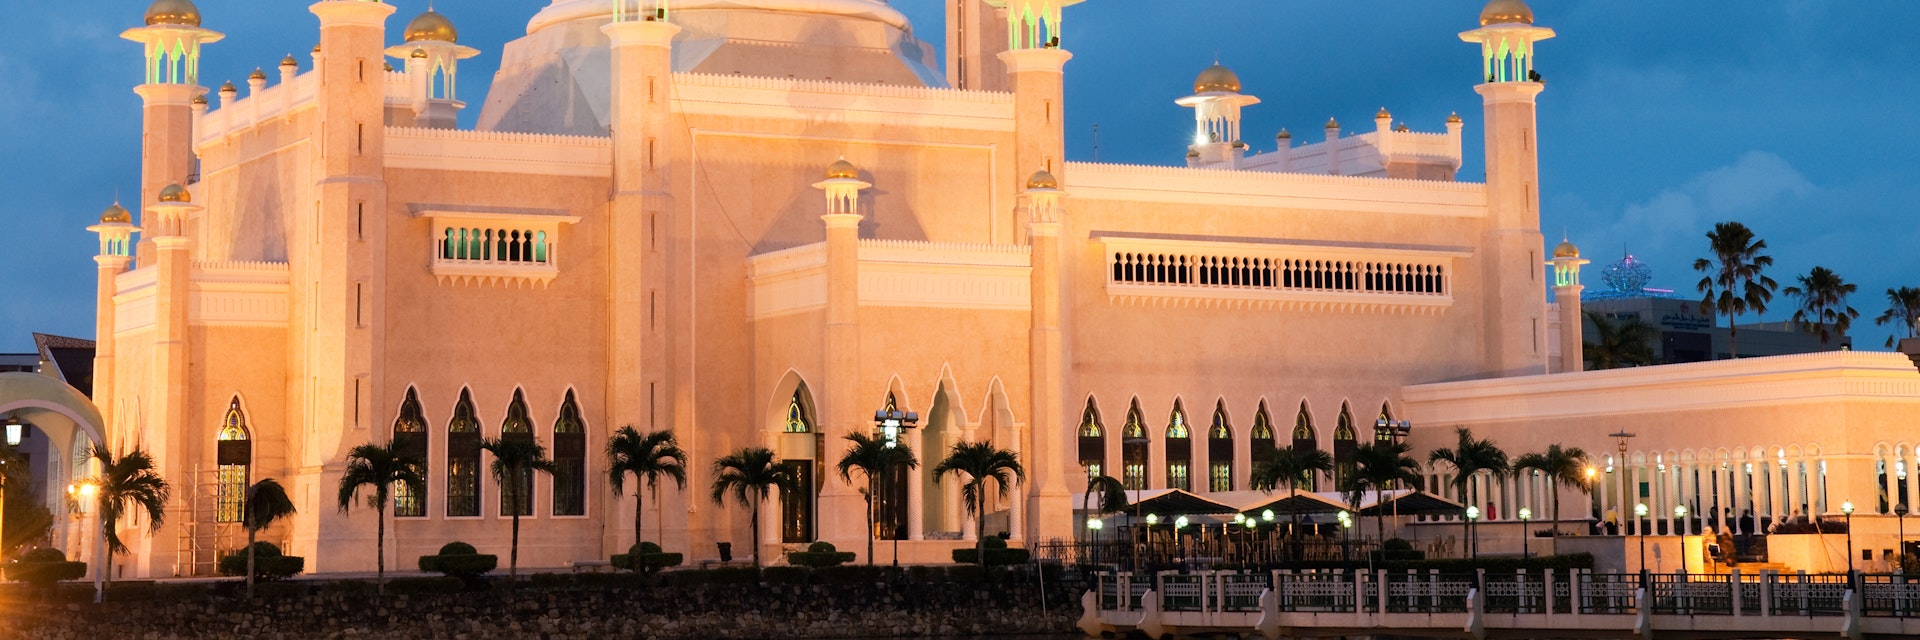 Omar Ali Saifuddien Mosque in the capital Bandar Sei Begawan, Brunei, at night.